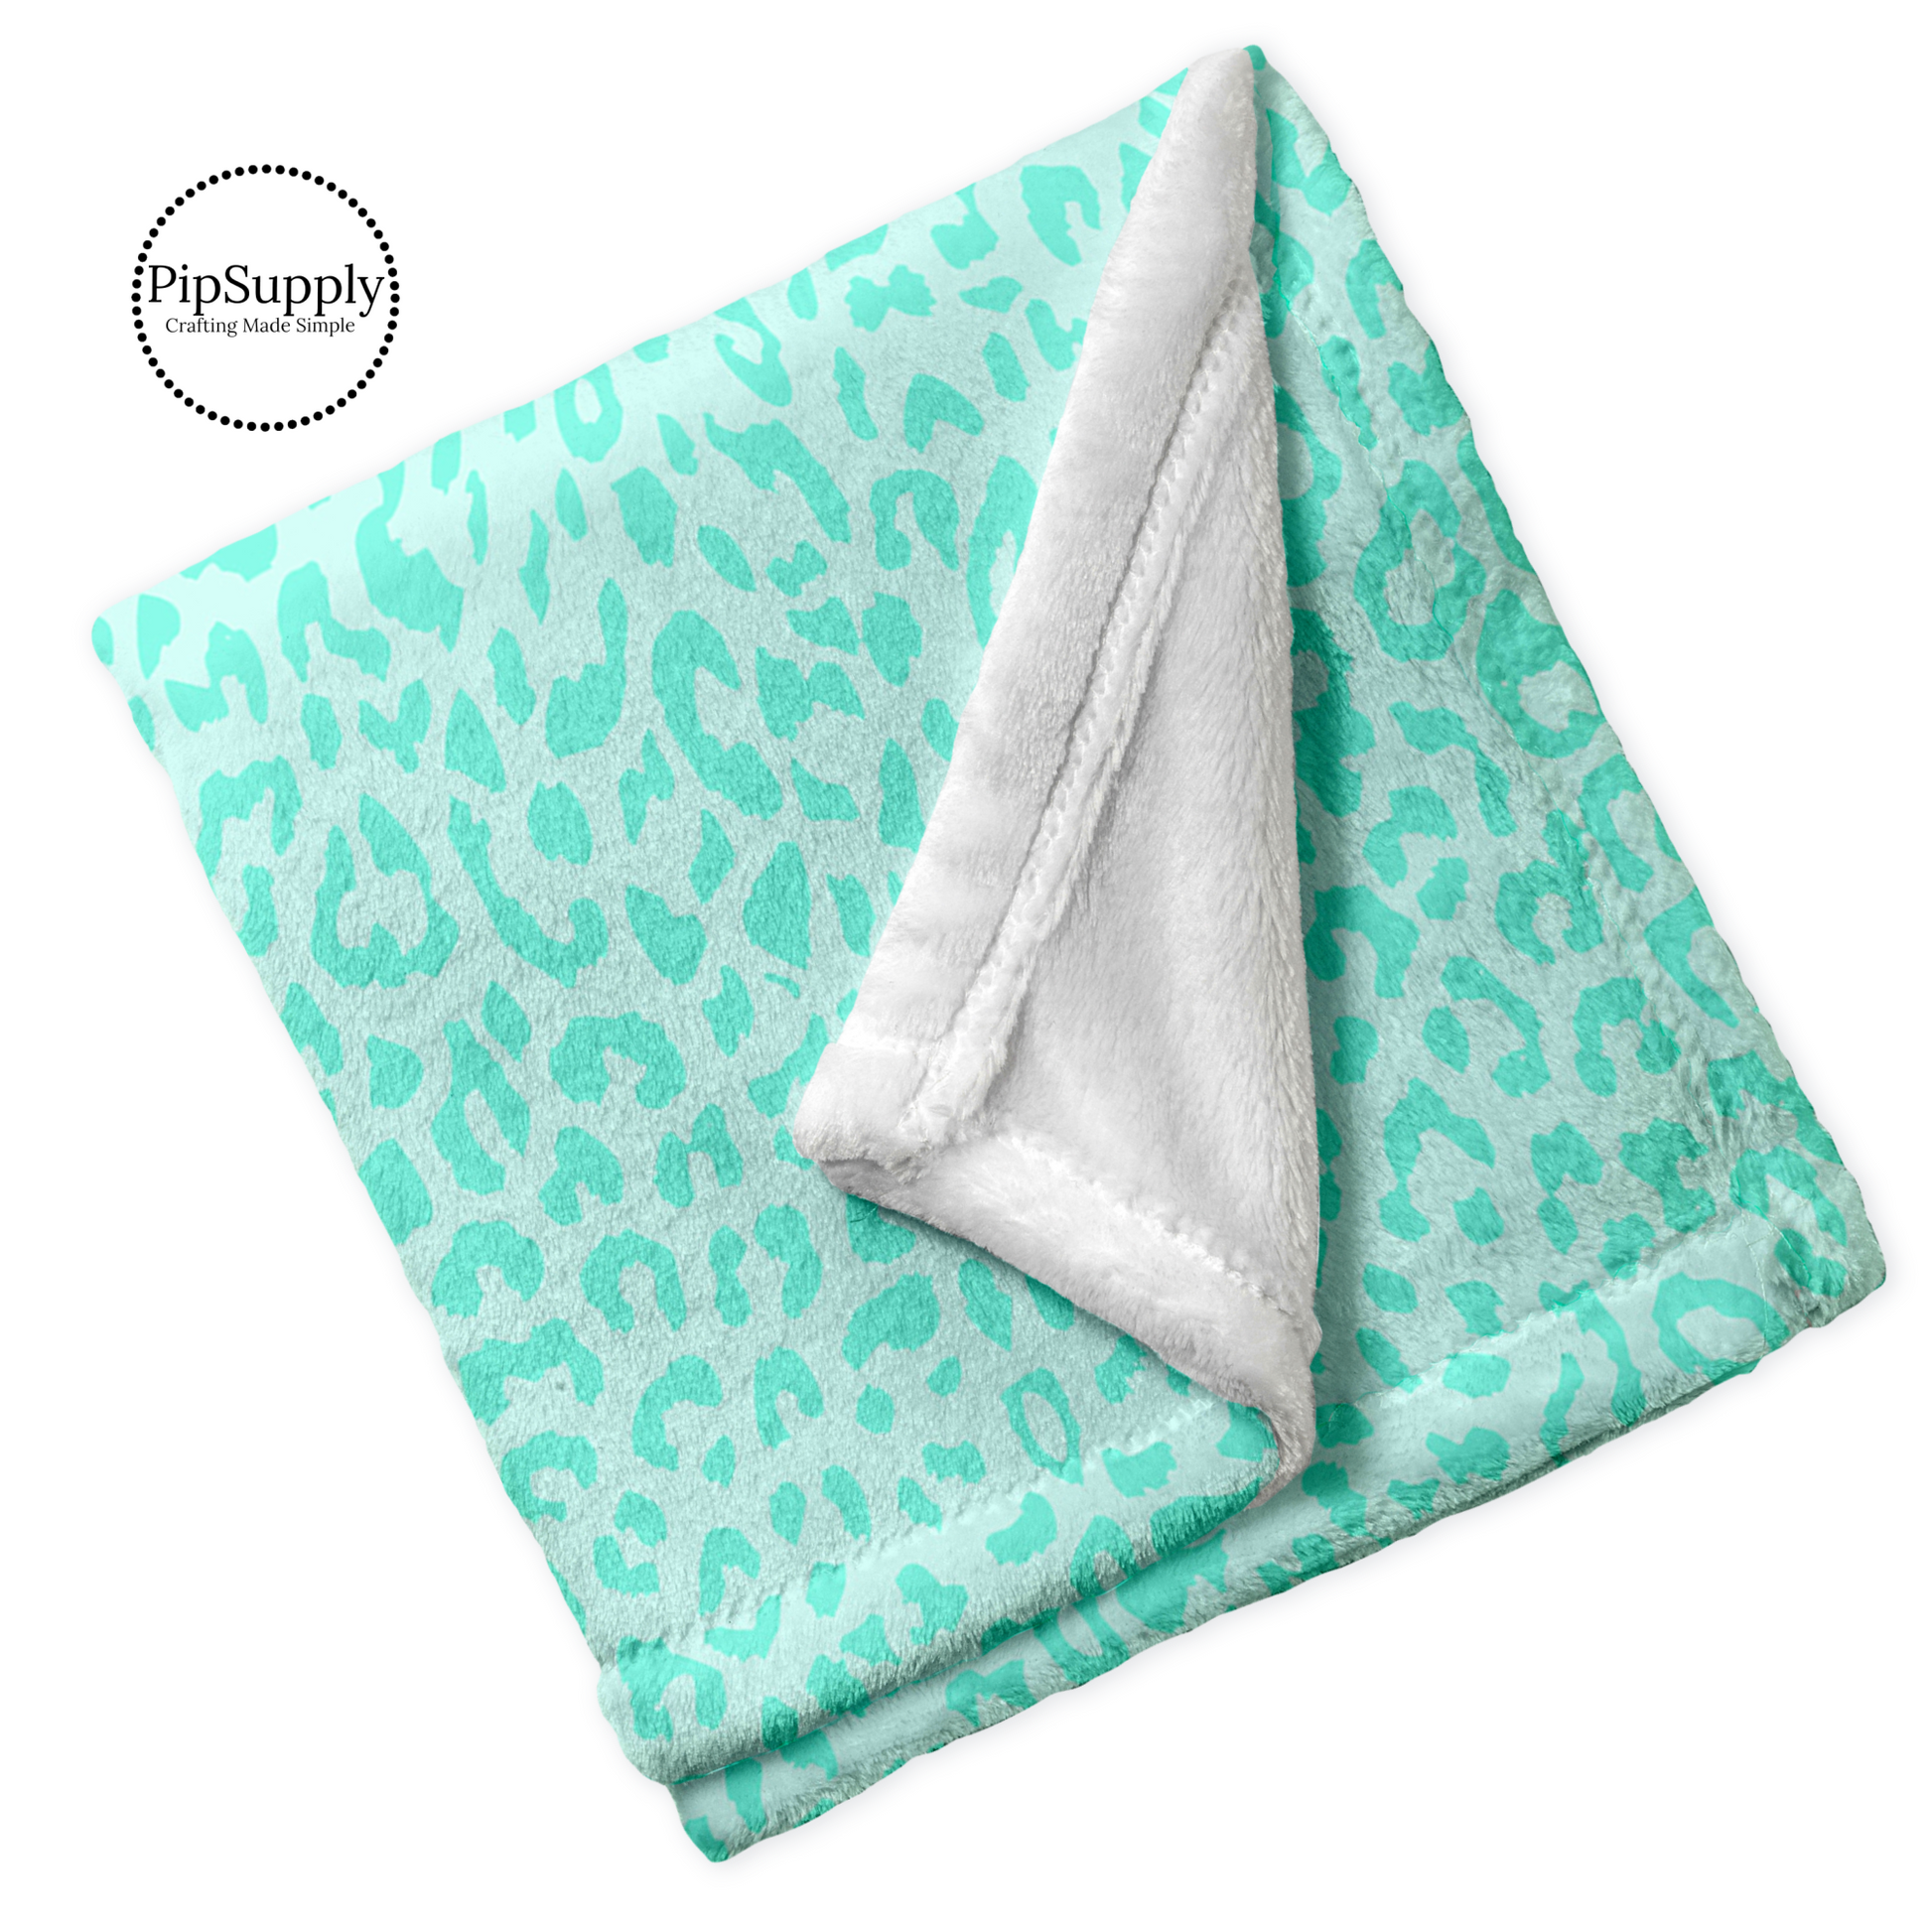 Soft folded minky blanket with light blue and aqua leopard animal print.